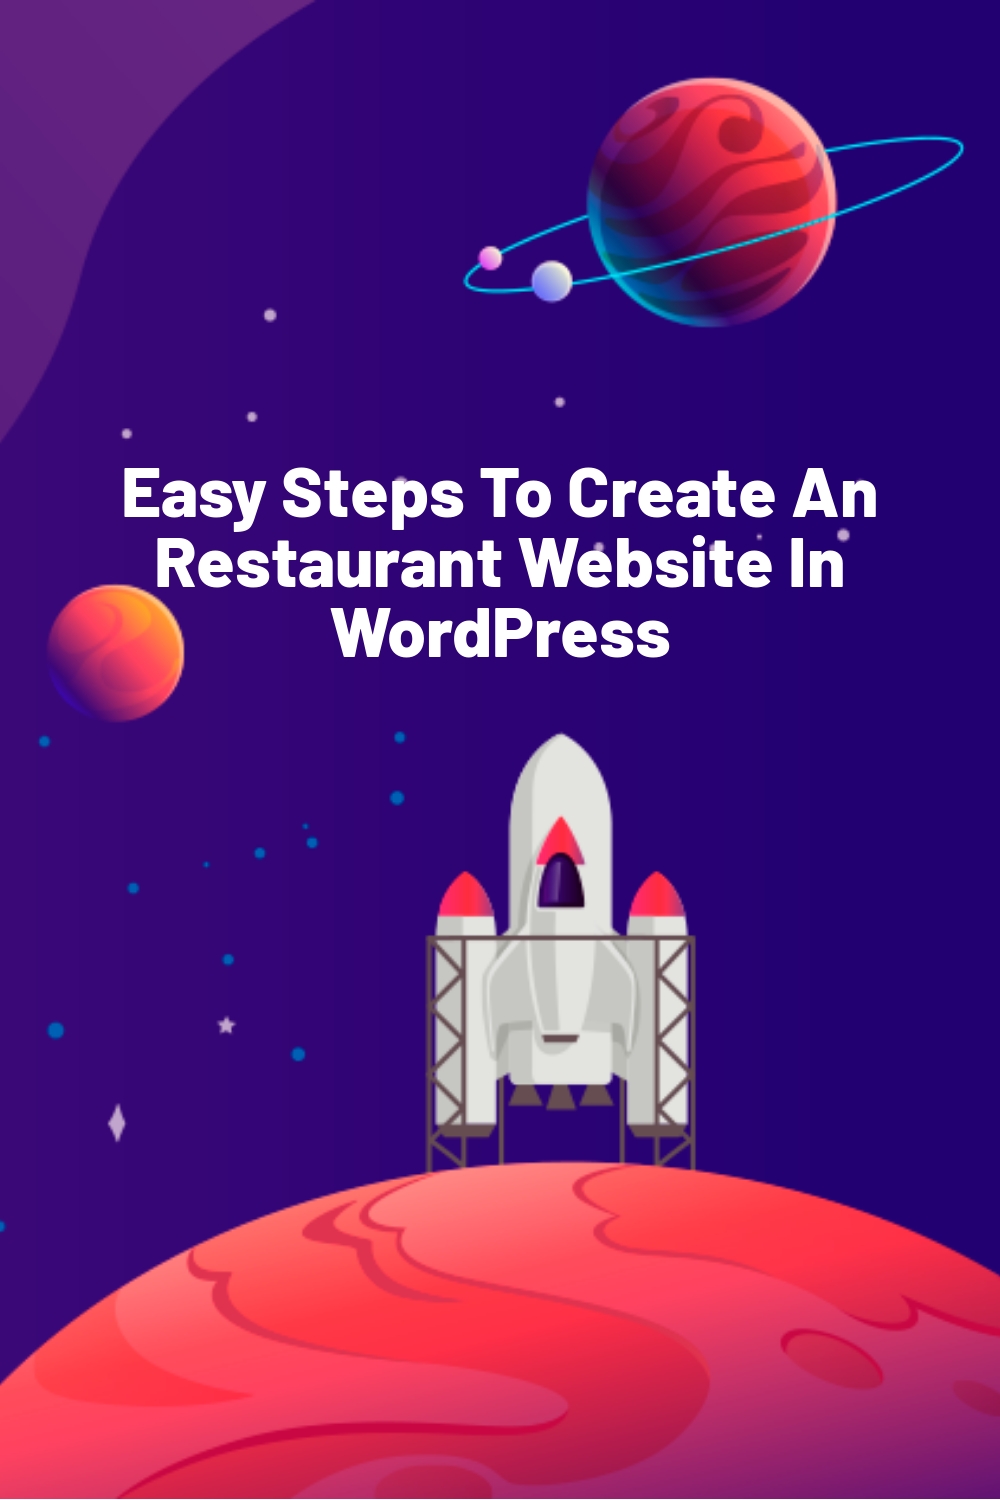 Easy Steps To Create An Restaurant Website In WordPress